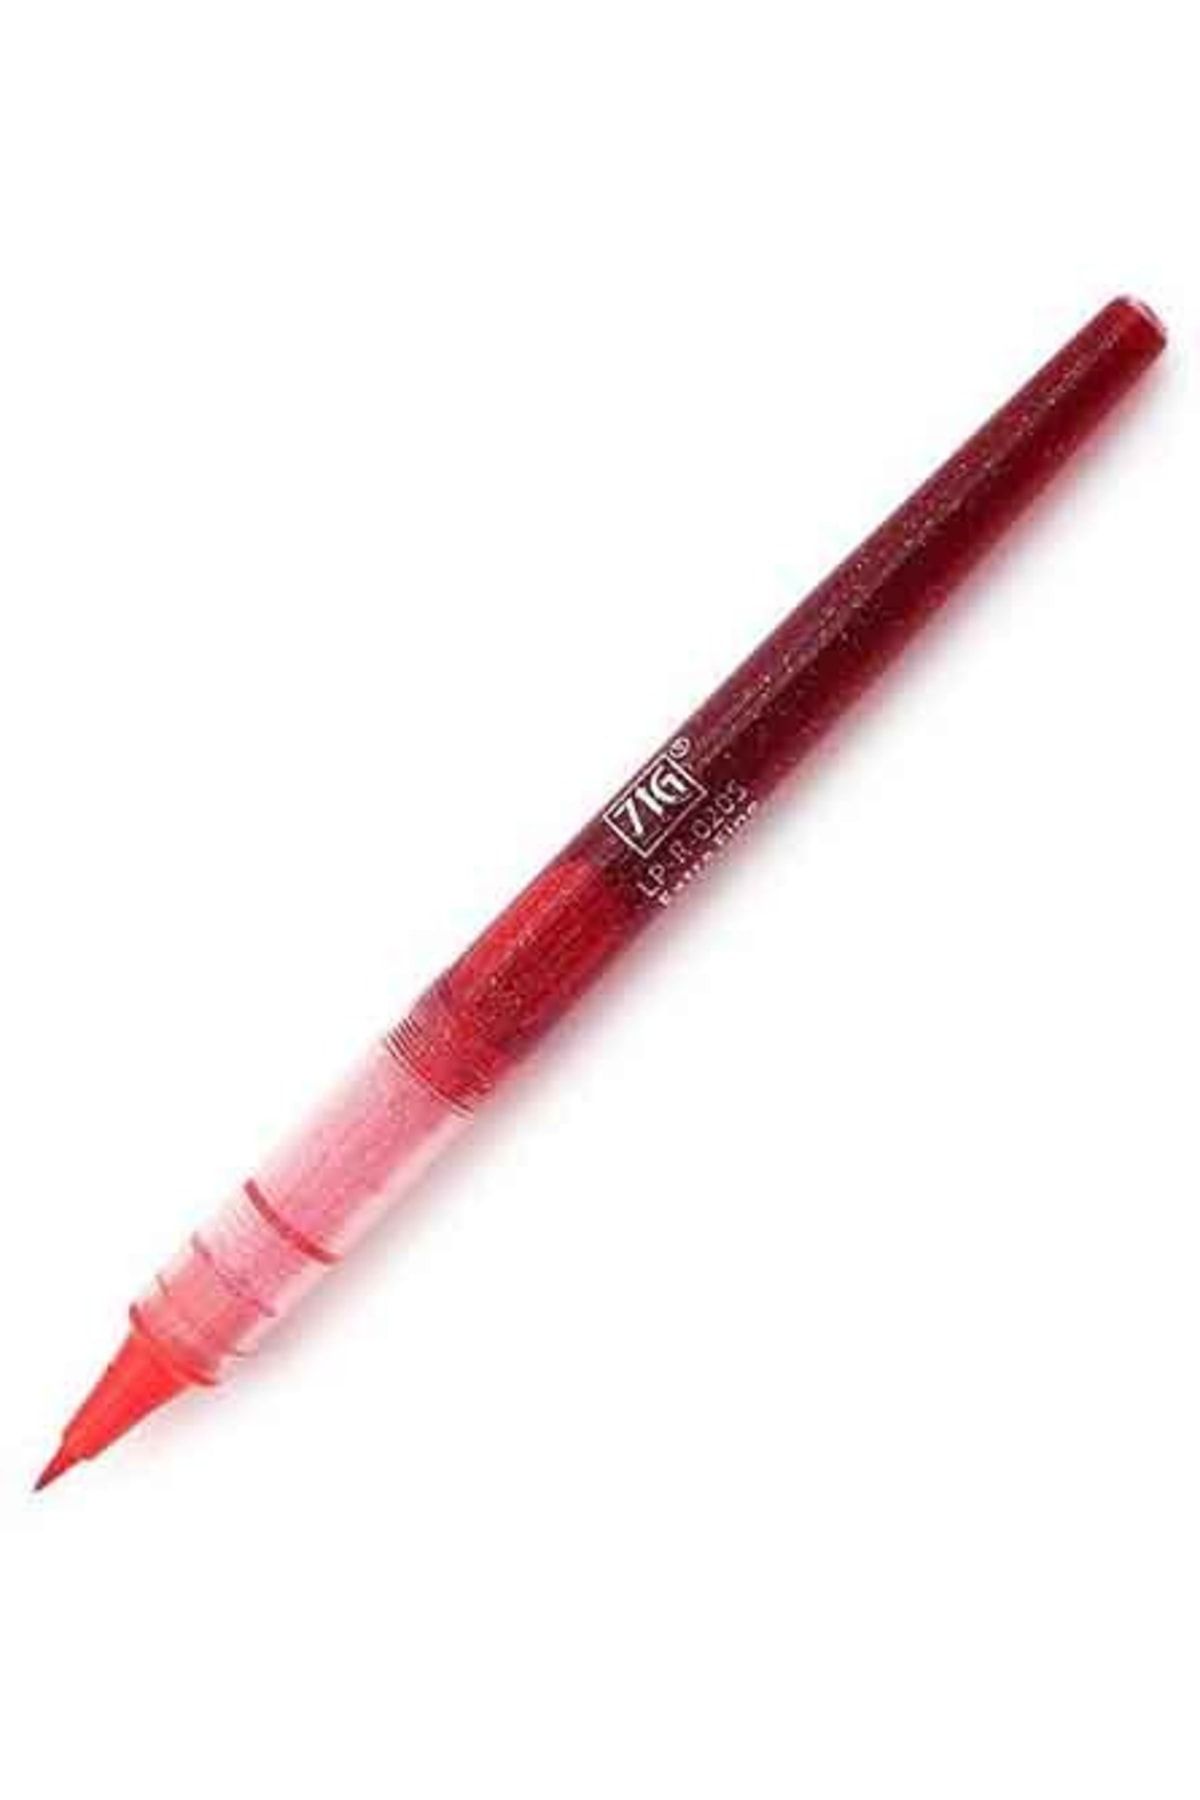 Zig Letter Pen Cocoıro Refıll Rb-20s 0.5mm Kırmızı